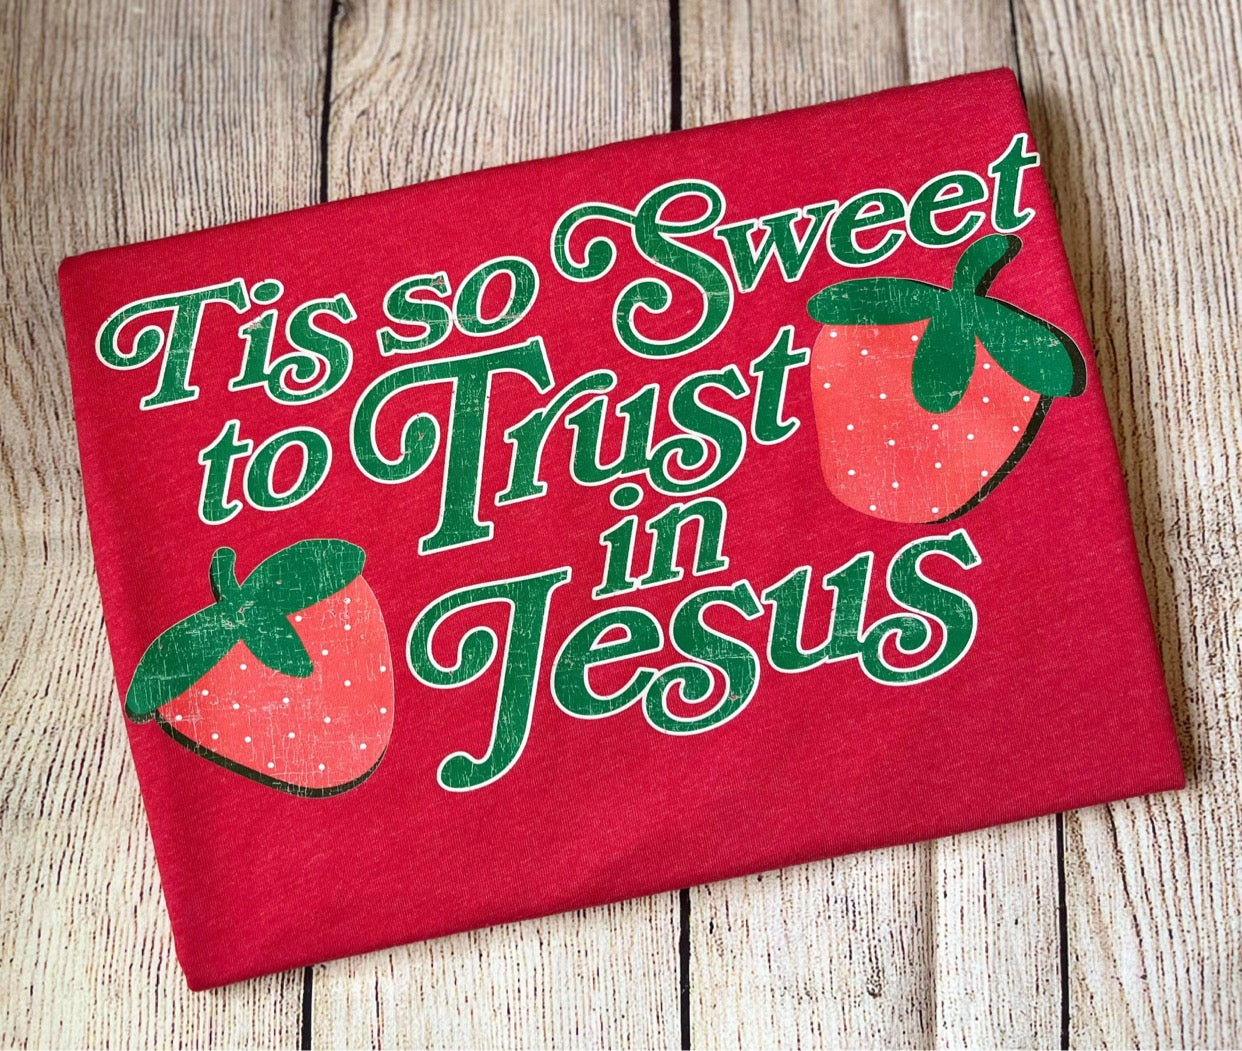 Tis so sweet to trust in Jesus